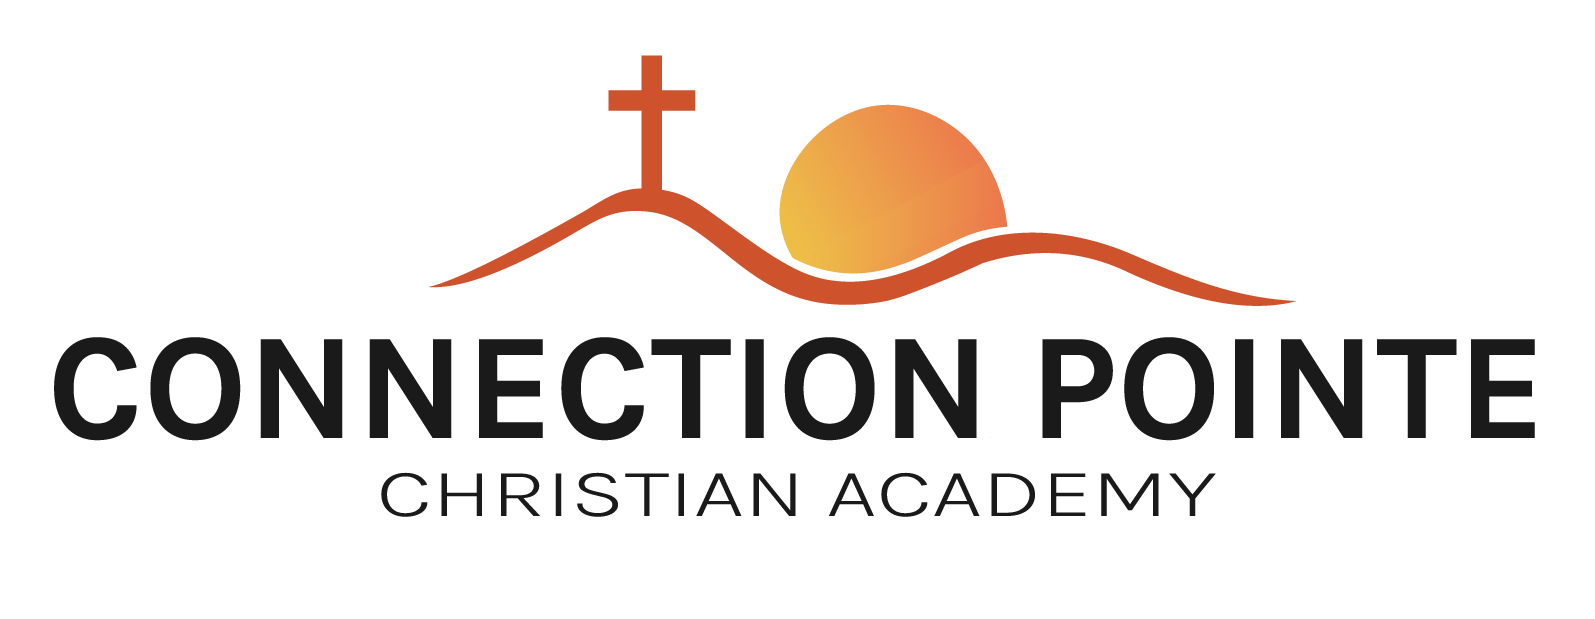 Connection Pointe Christian Academy Logo